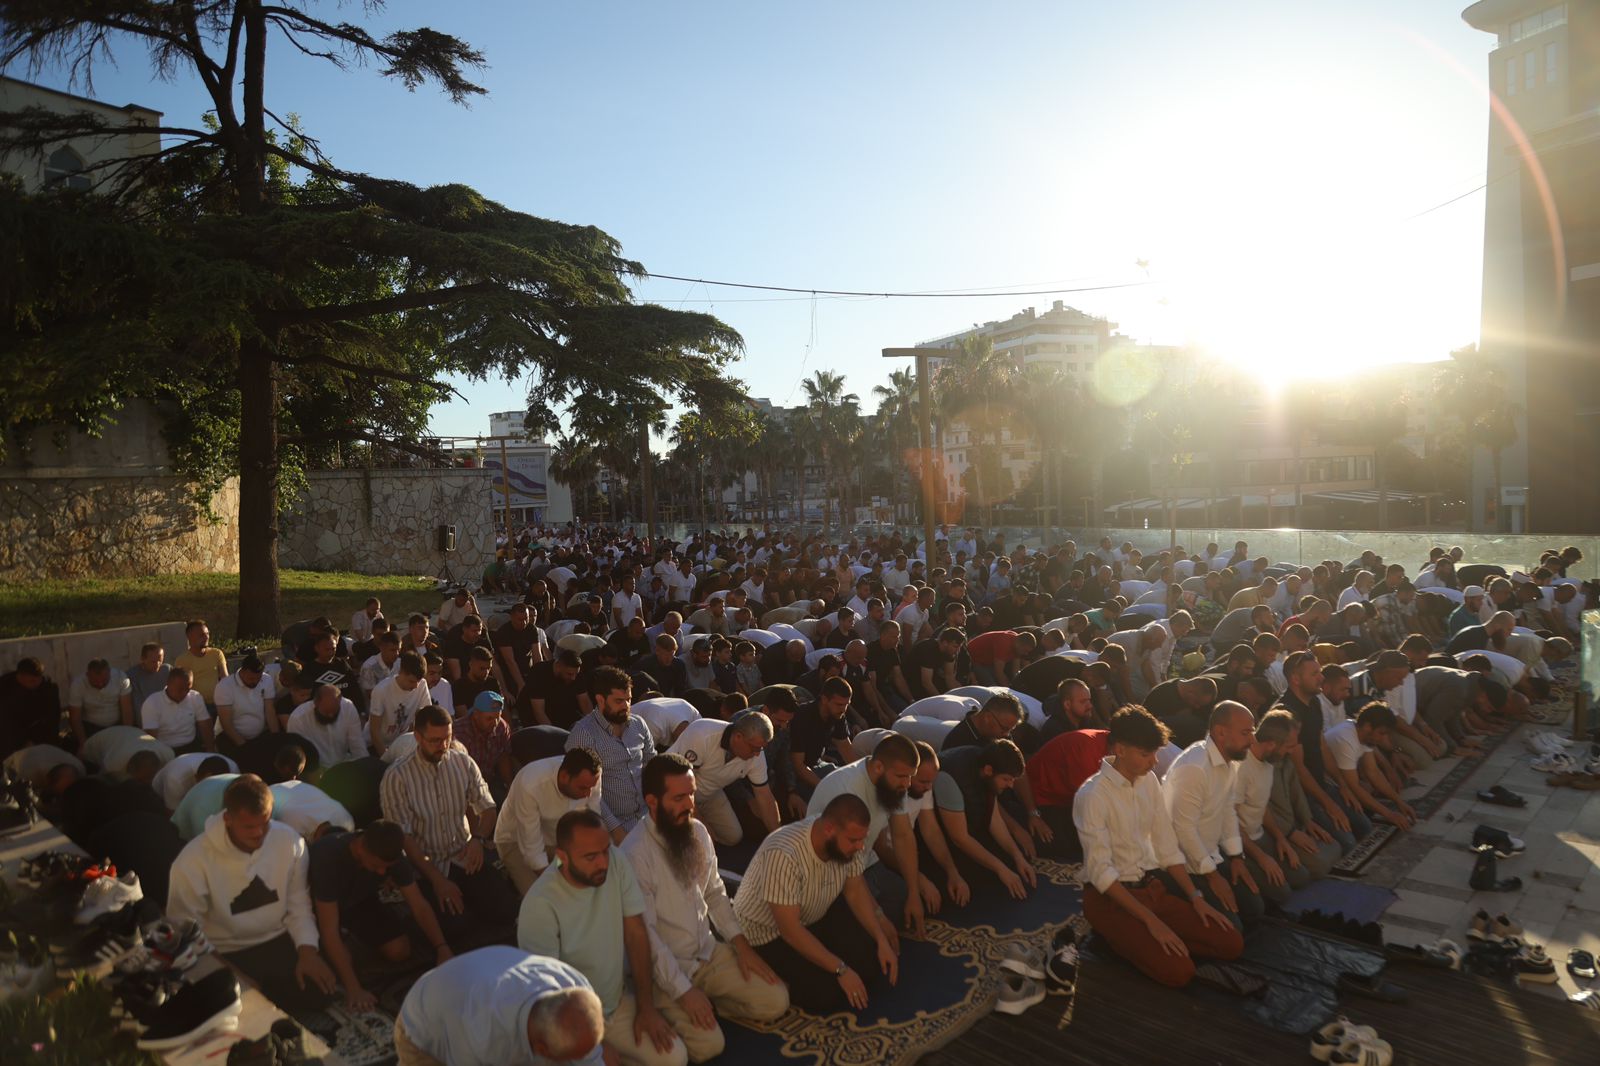 qindra besimtare myslimane ne durres falin namazin e kurban bajramit ne xhamine e madhe